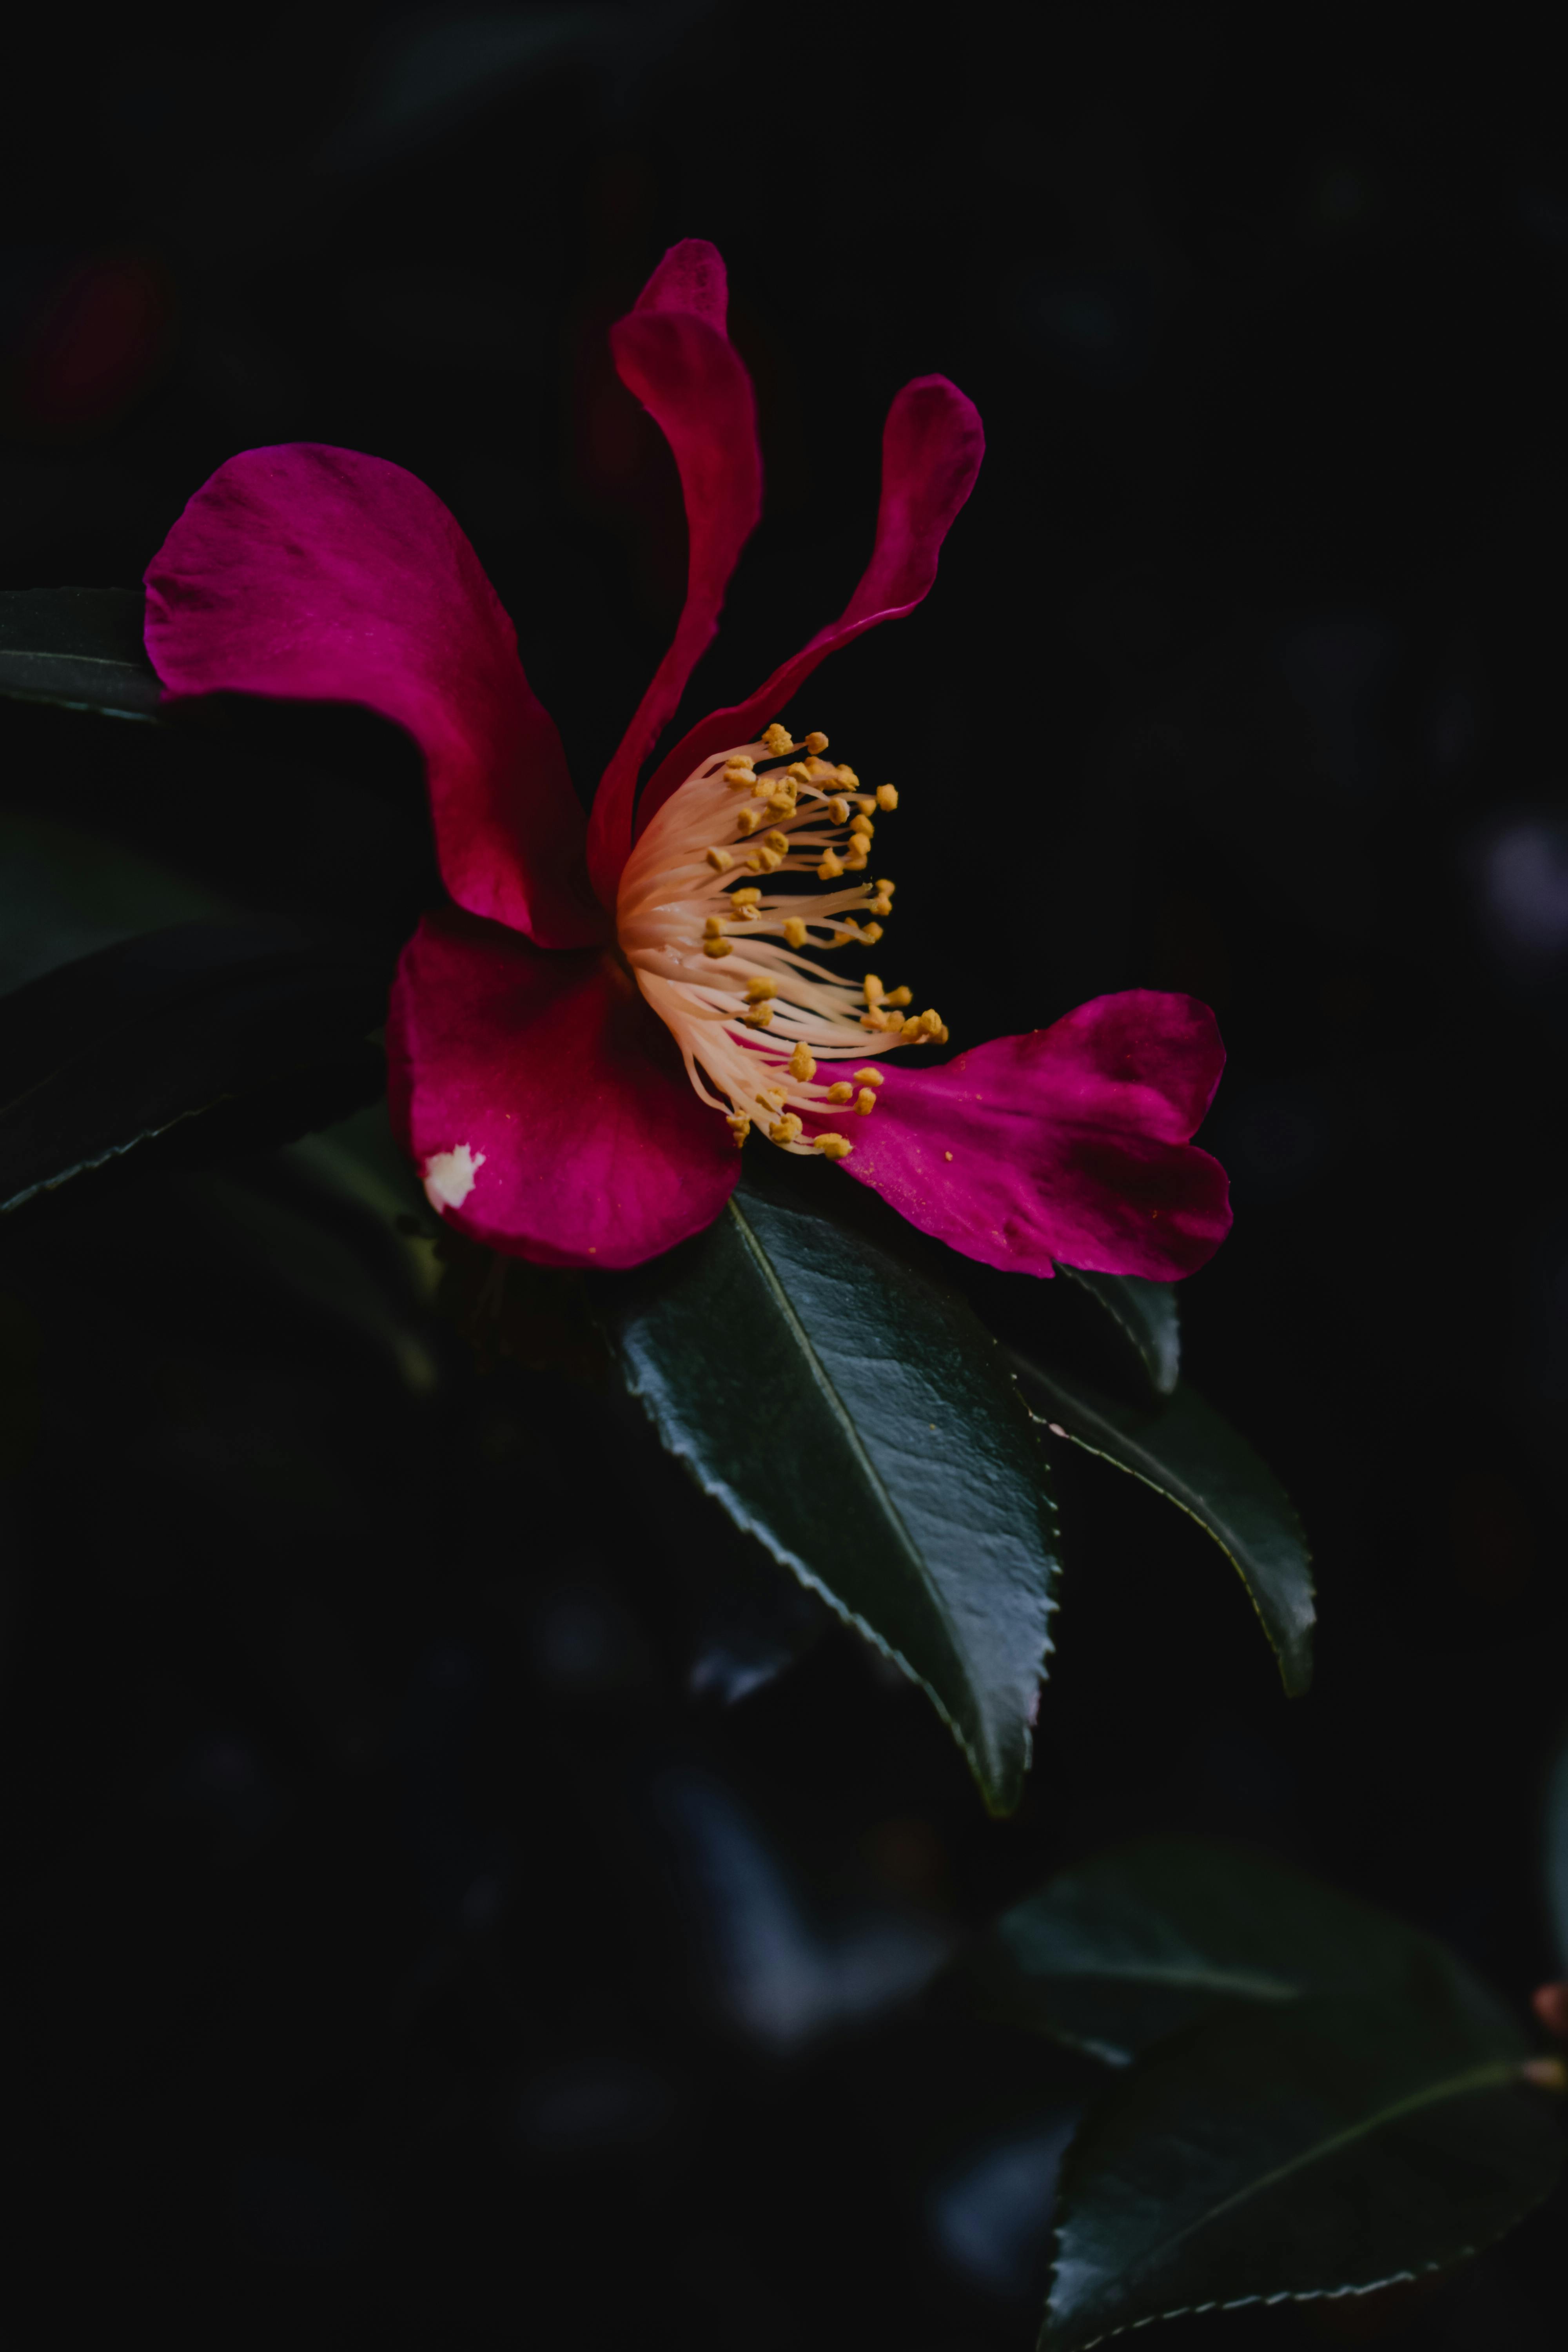 Camellia Flower Pictures  Download Free Images on Unsplash